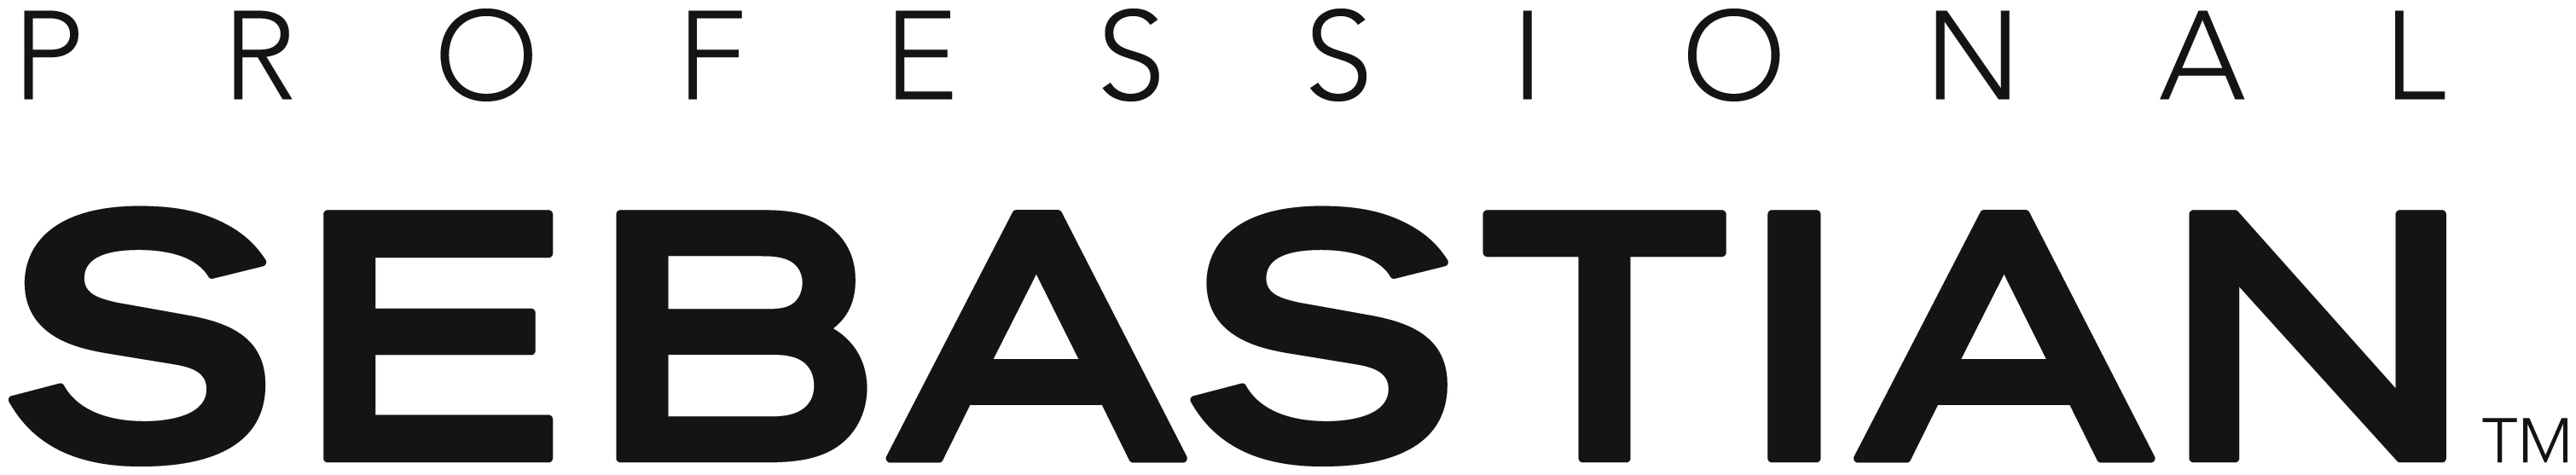 Косметика бренда SEBASTIAN PROFESSIONAL, логотип